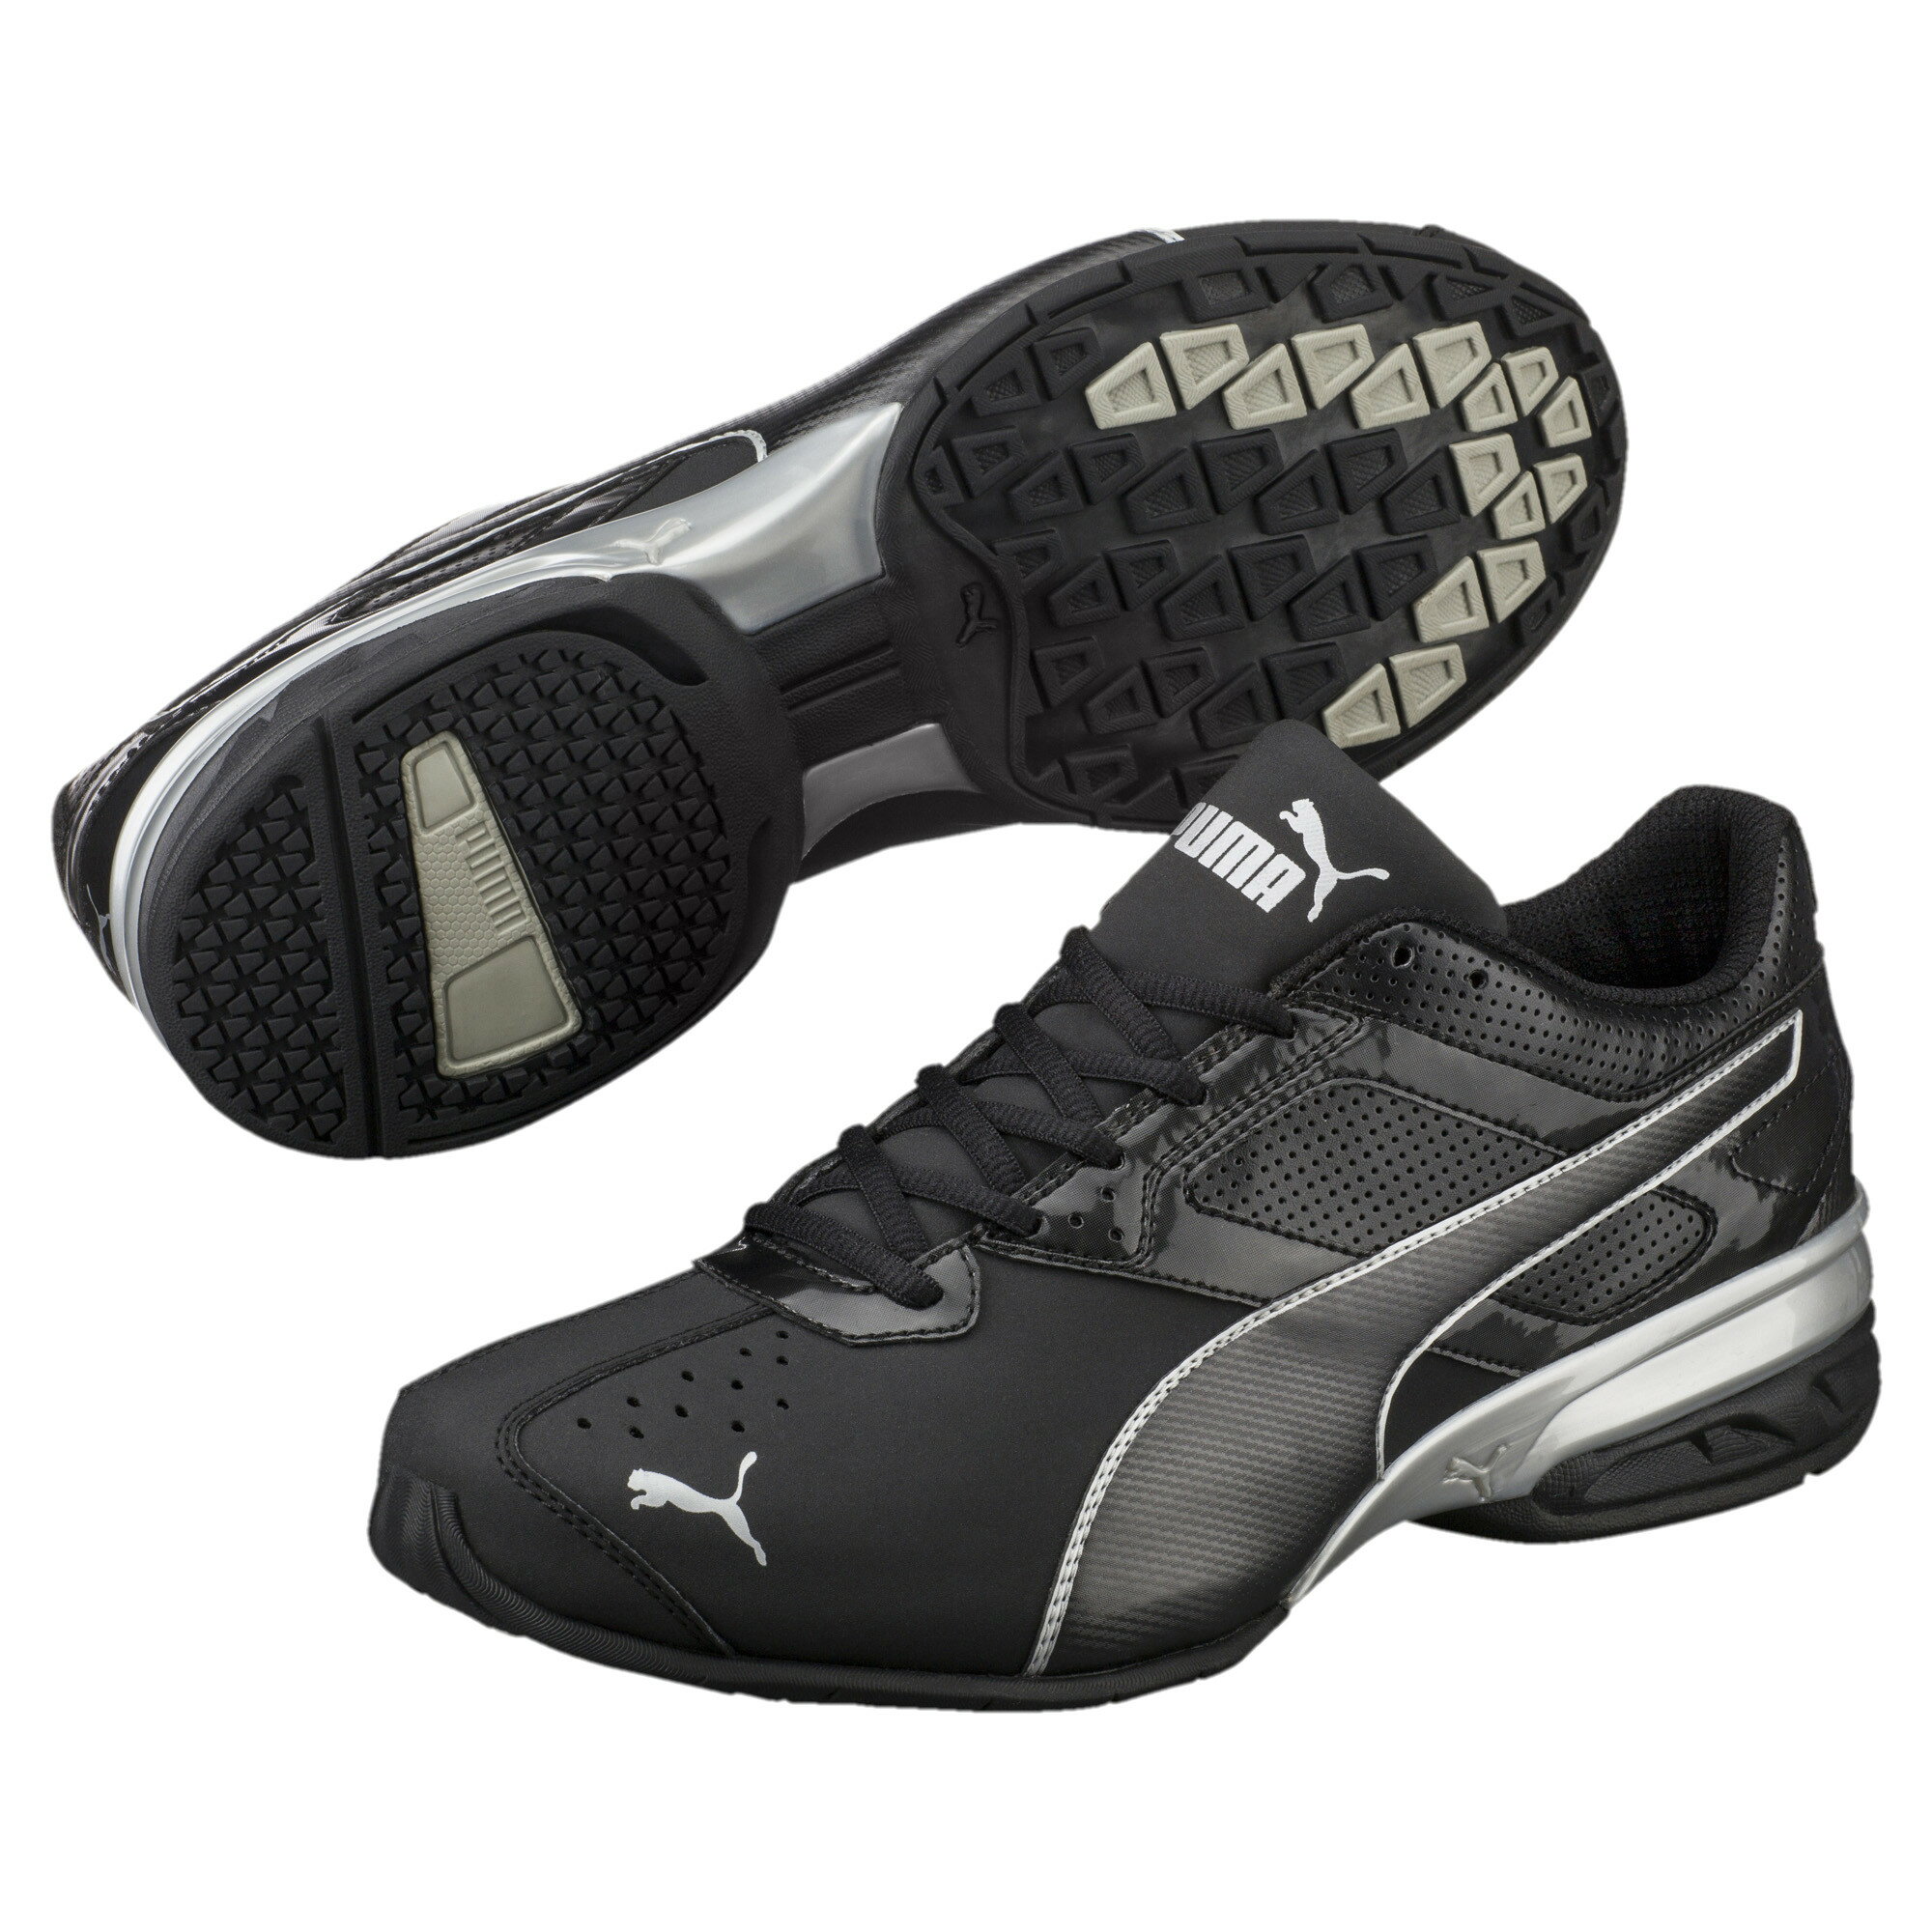 Official Puma Store: PUMA Tazon 6 FM Men's Sneakers Men Shoe Running ...